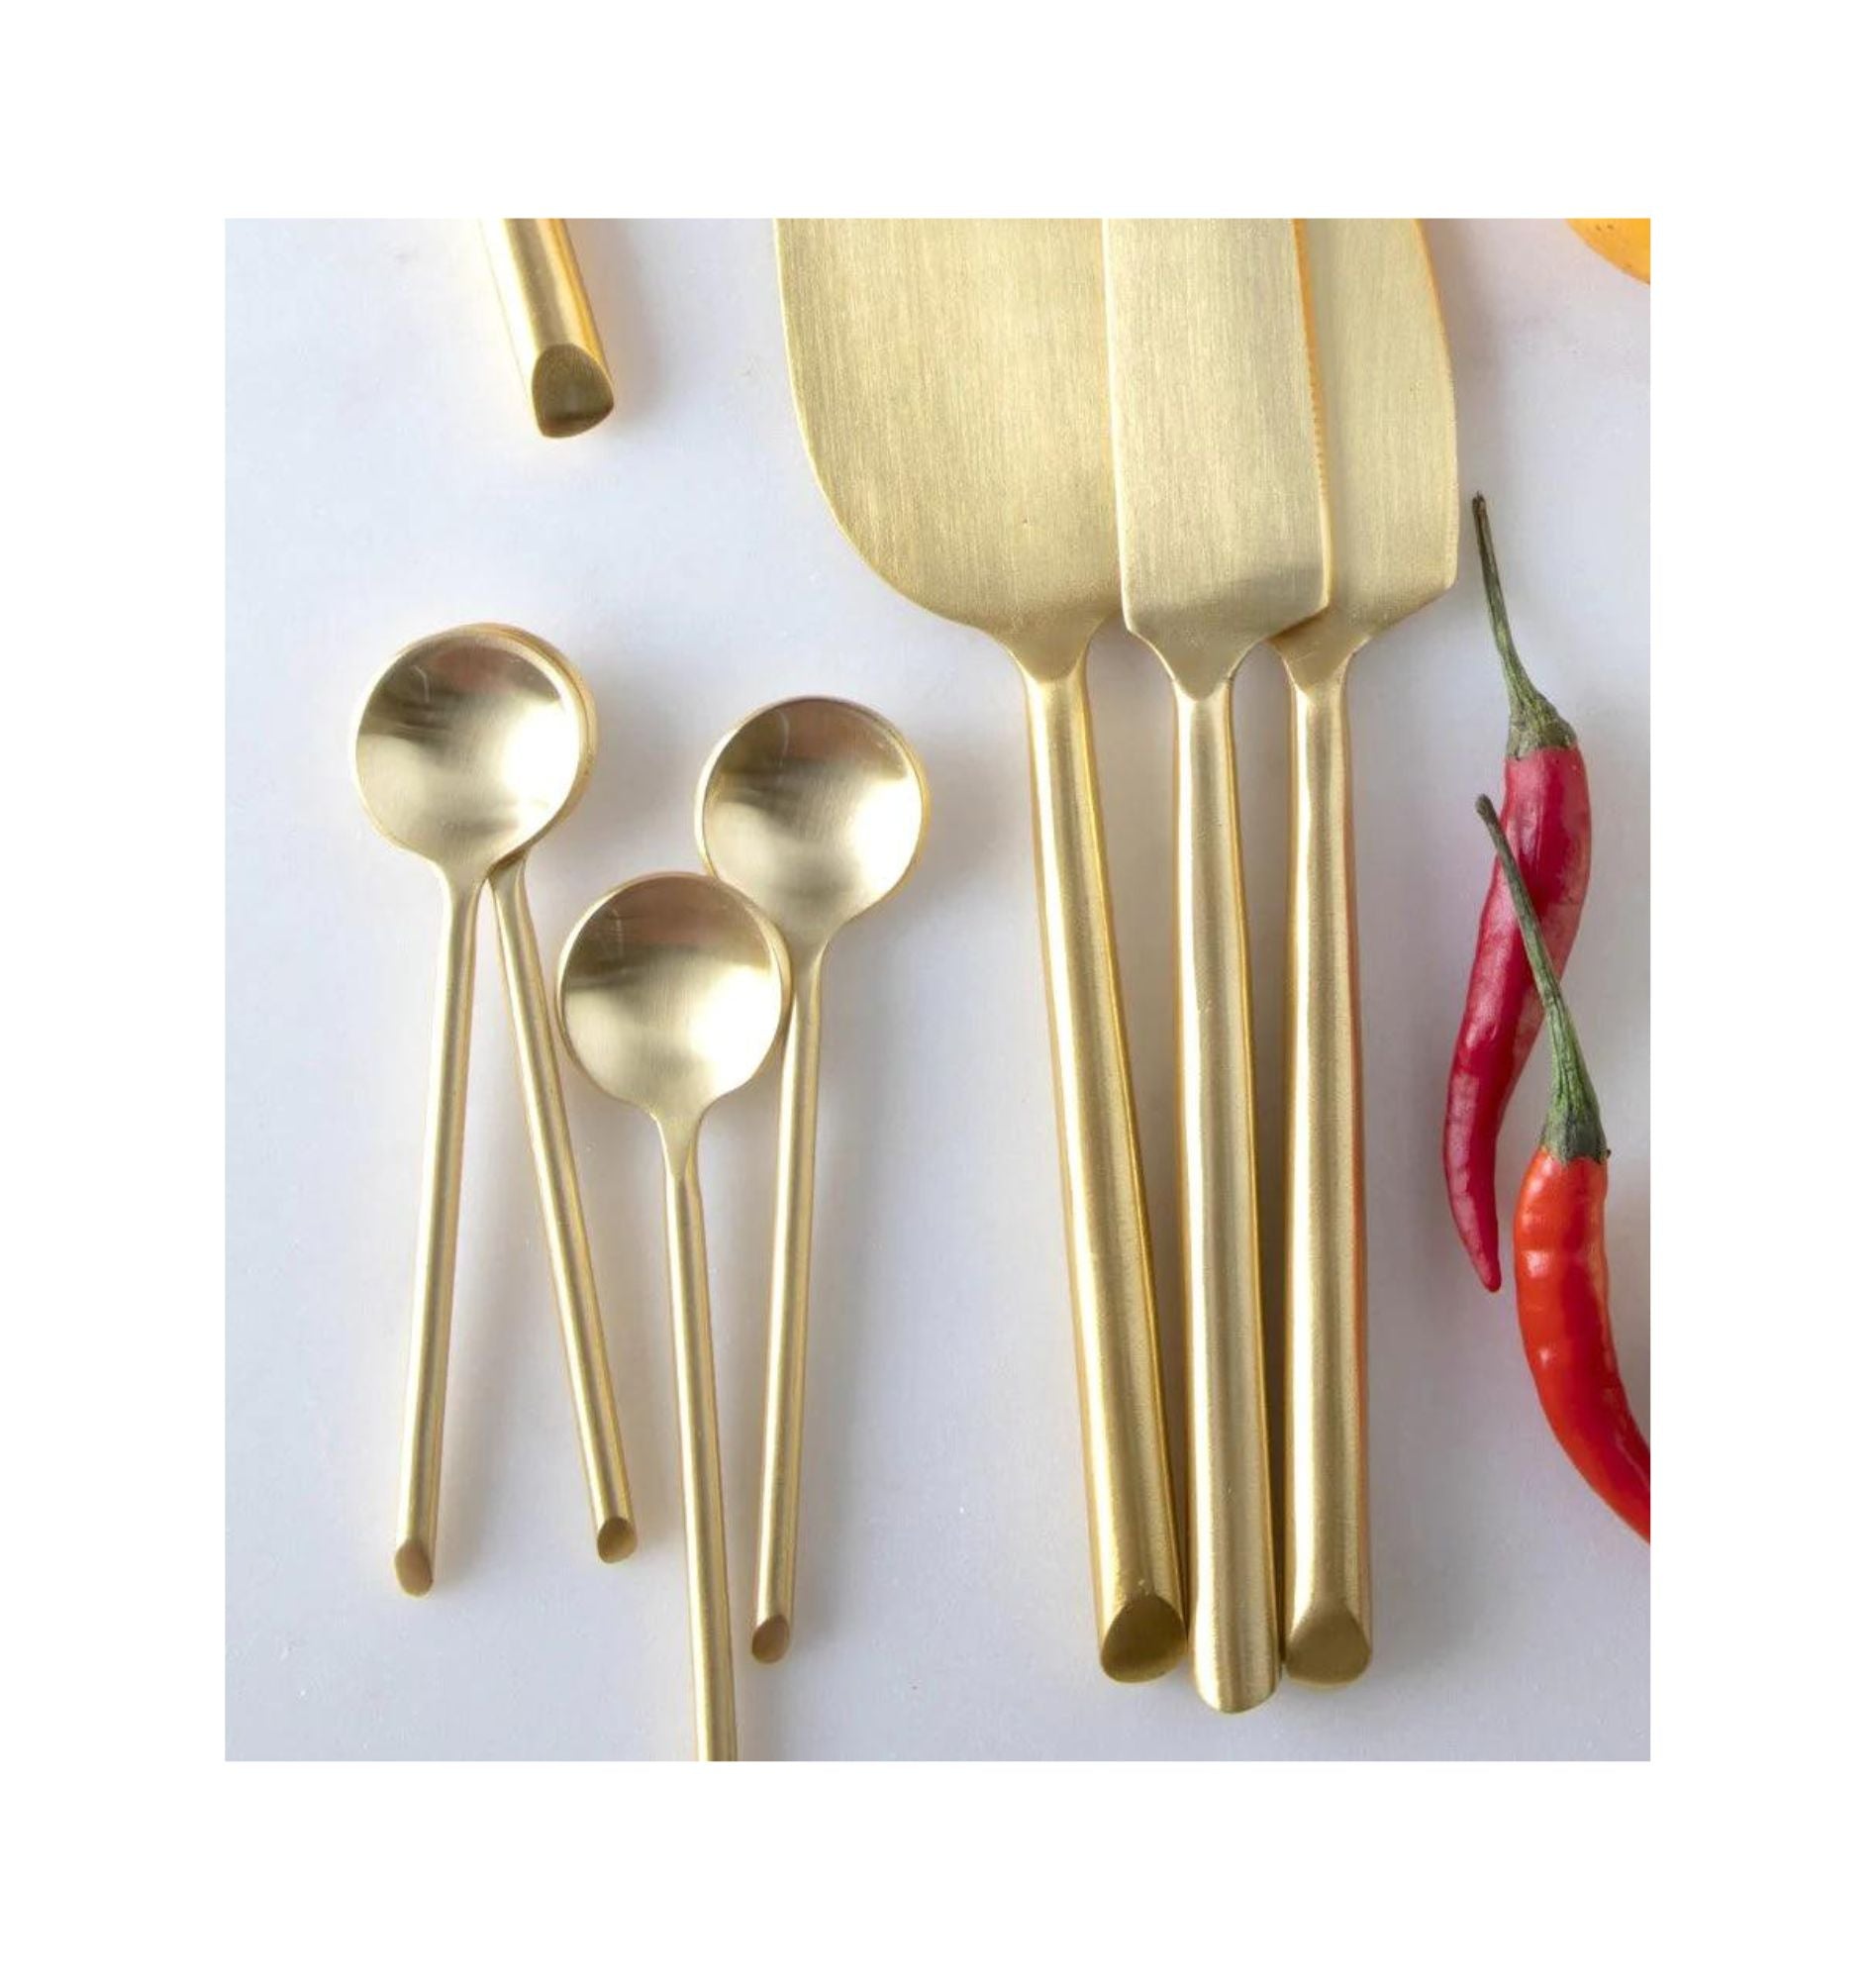 Gold Mini Spoons